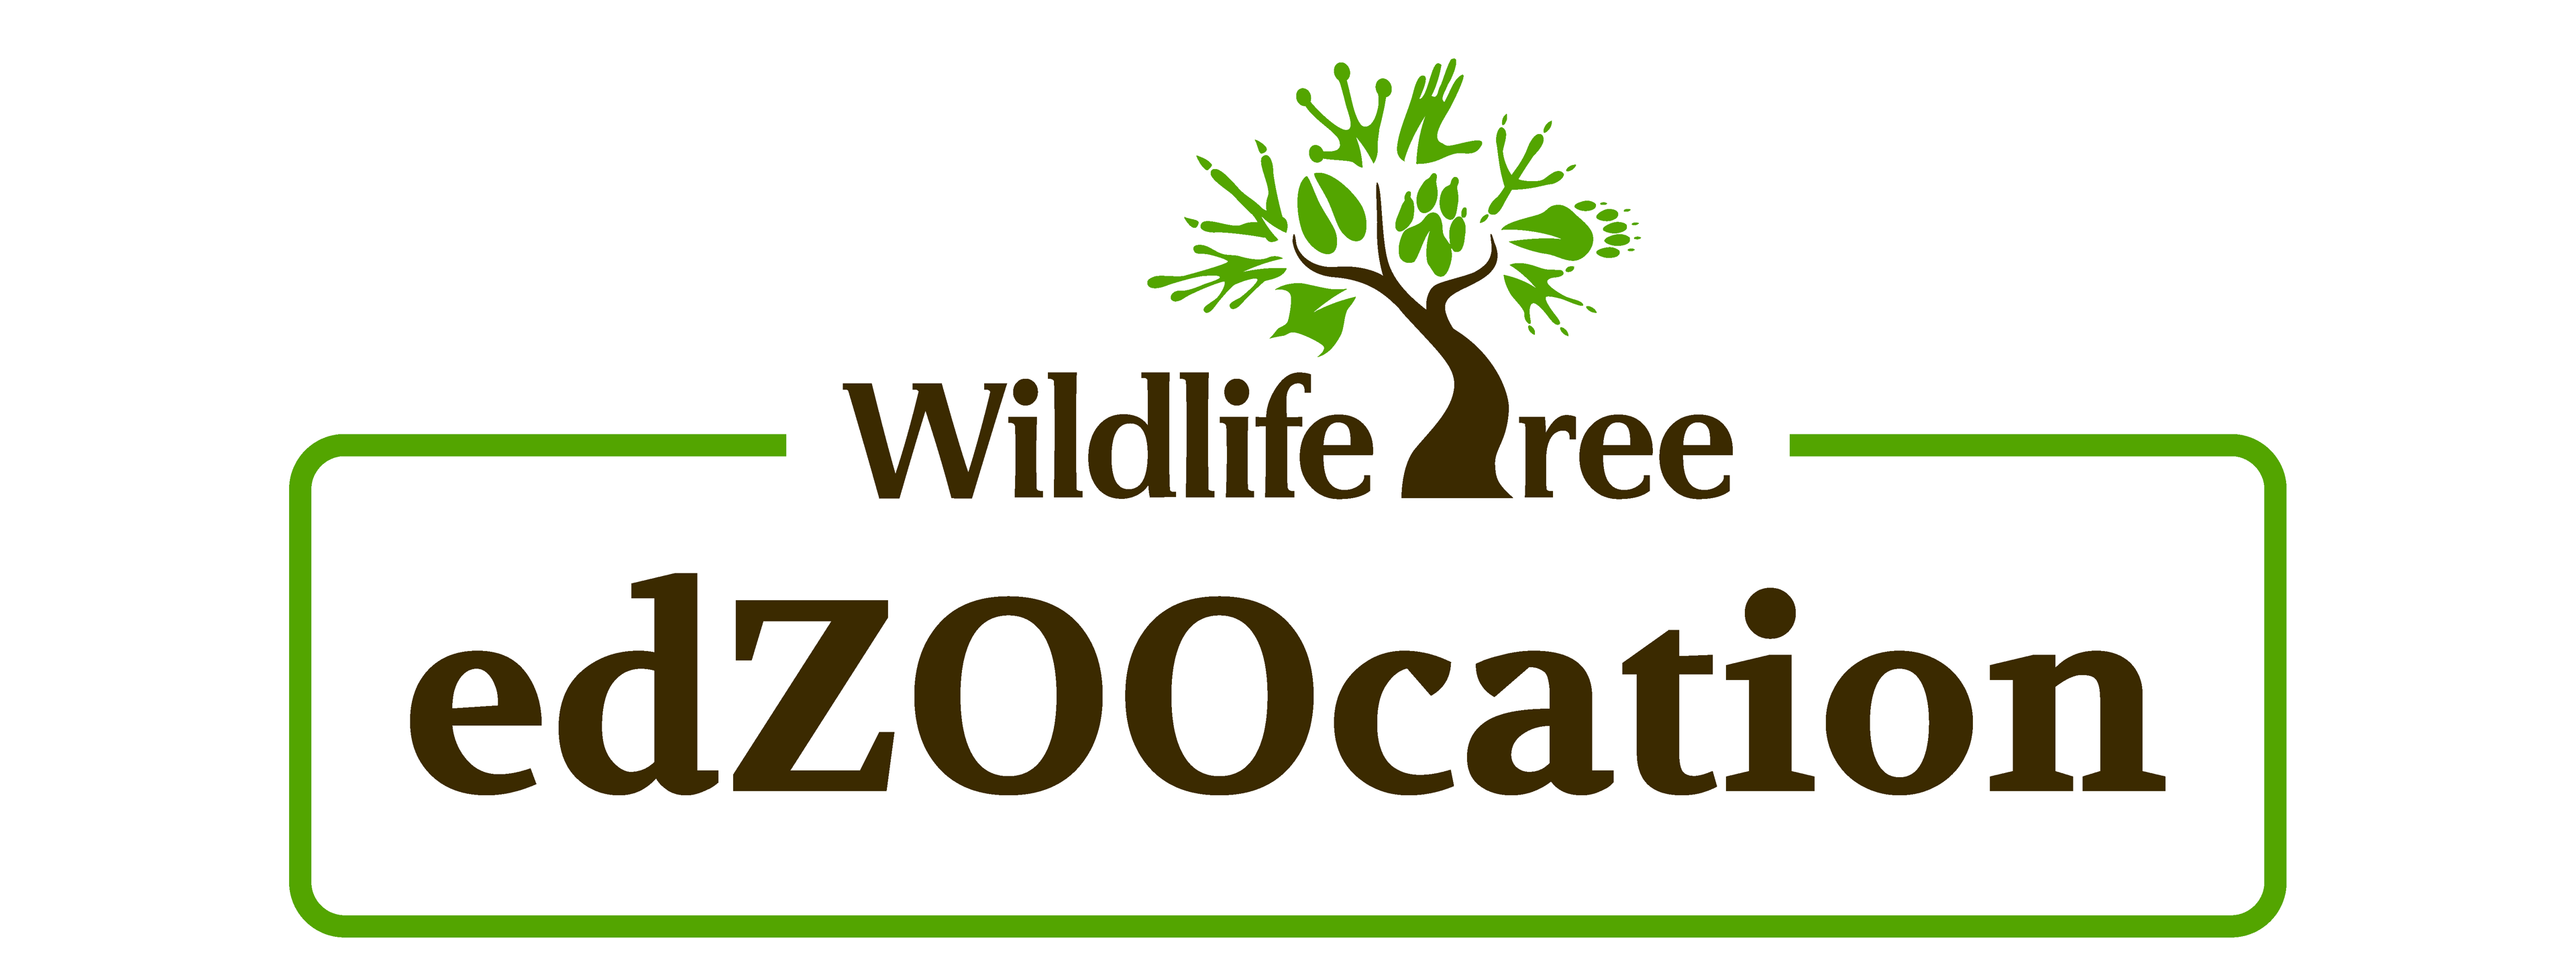 edZOOcation Help Center logo